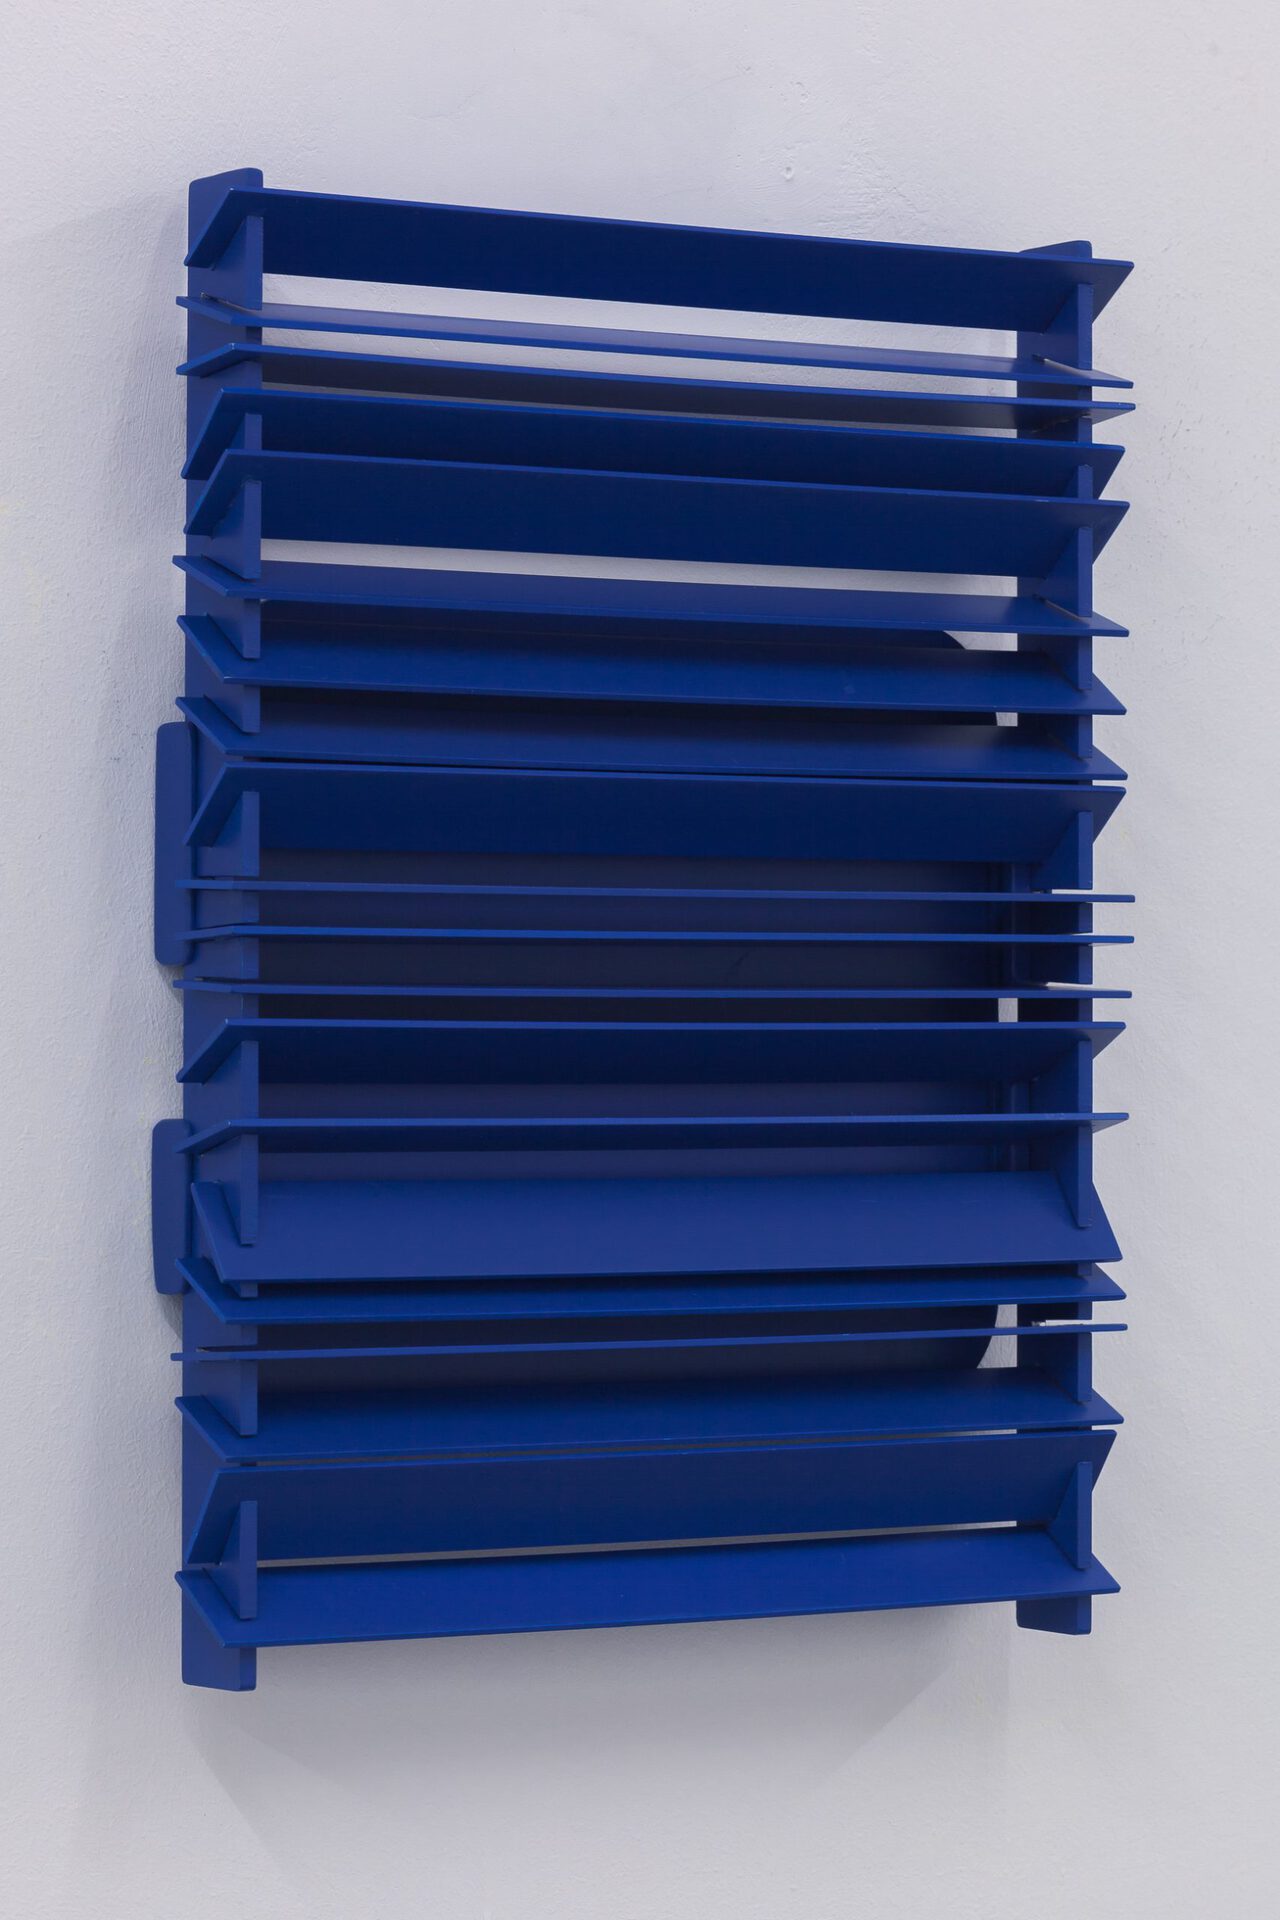 Elizabeth Orr, Blue Screen, 2021, Aluminum, wood, plexiglass, 61 x 38.1 x 3.8 cm, 24 x 15 x 1.5 in